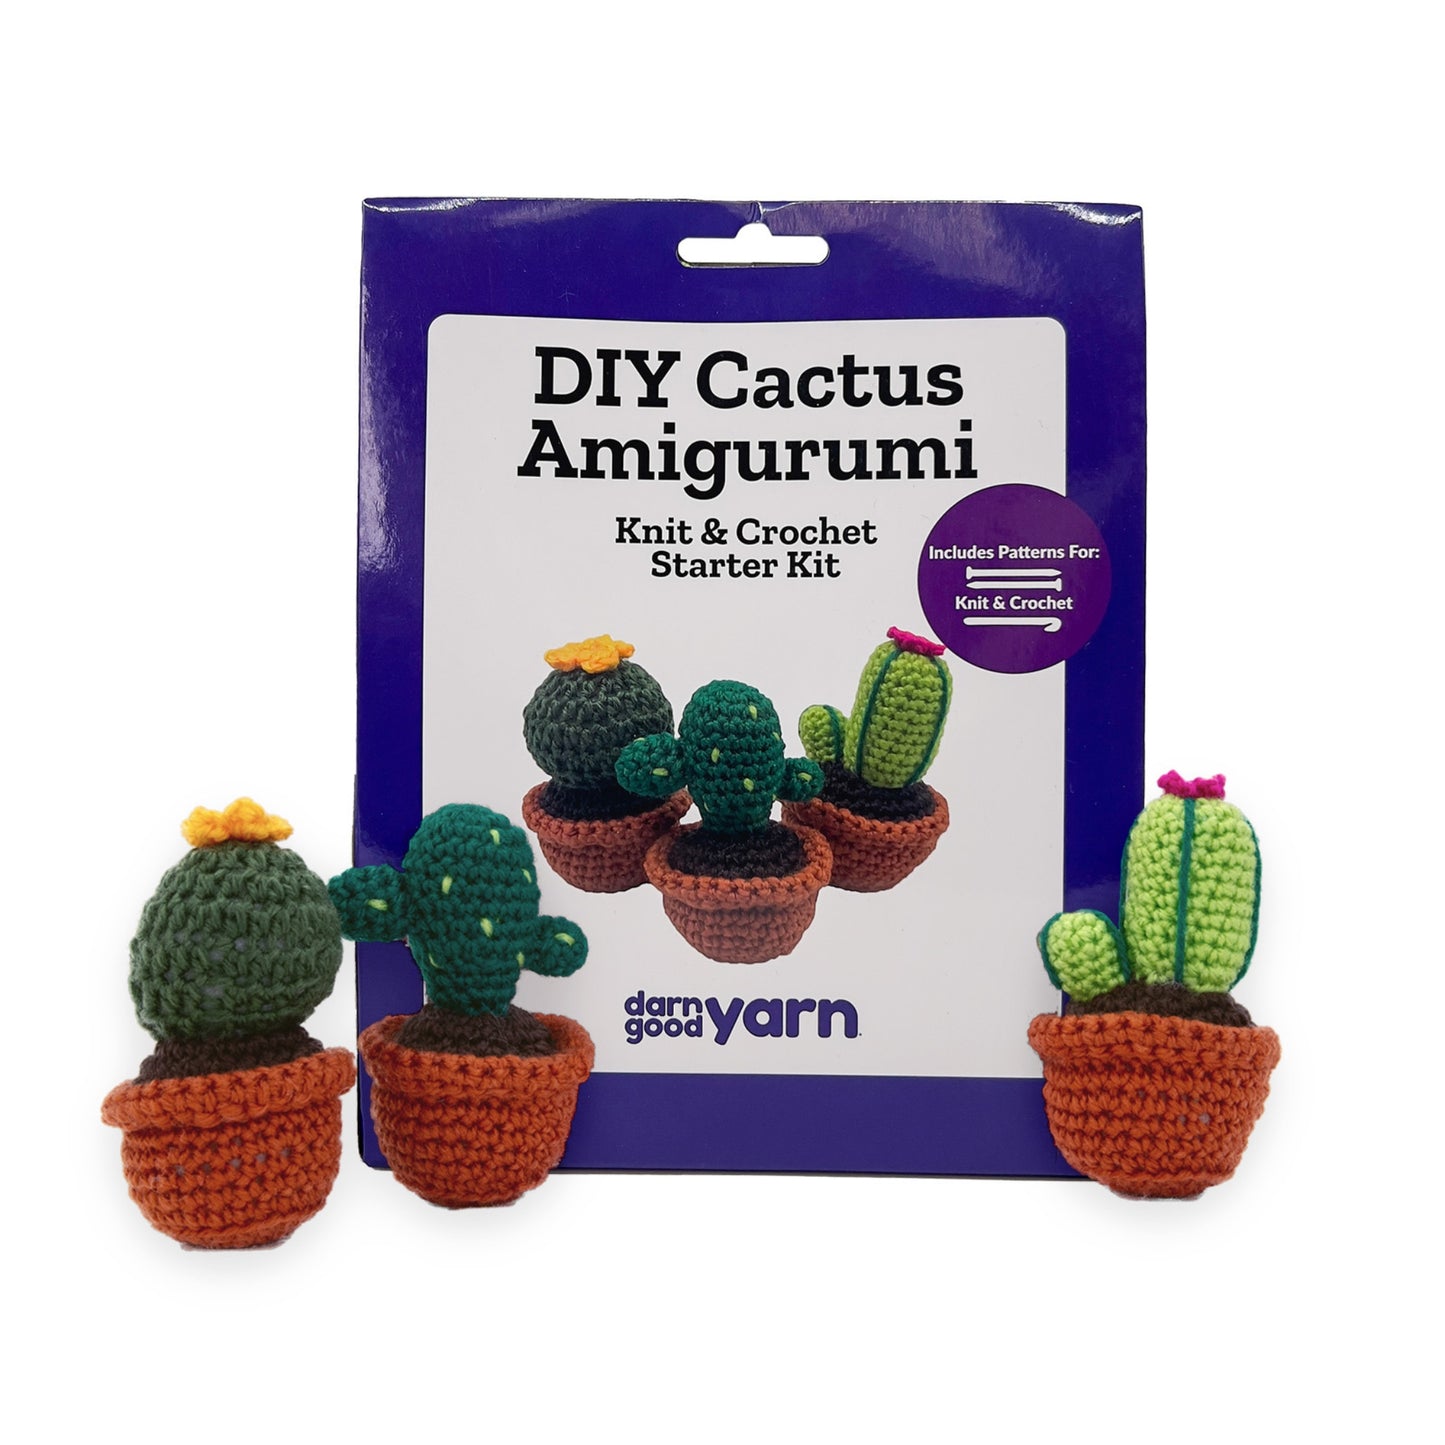 Created Cactus Amigurumis set up in front of amigurumi packaging.